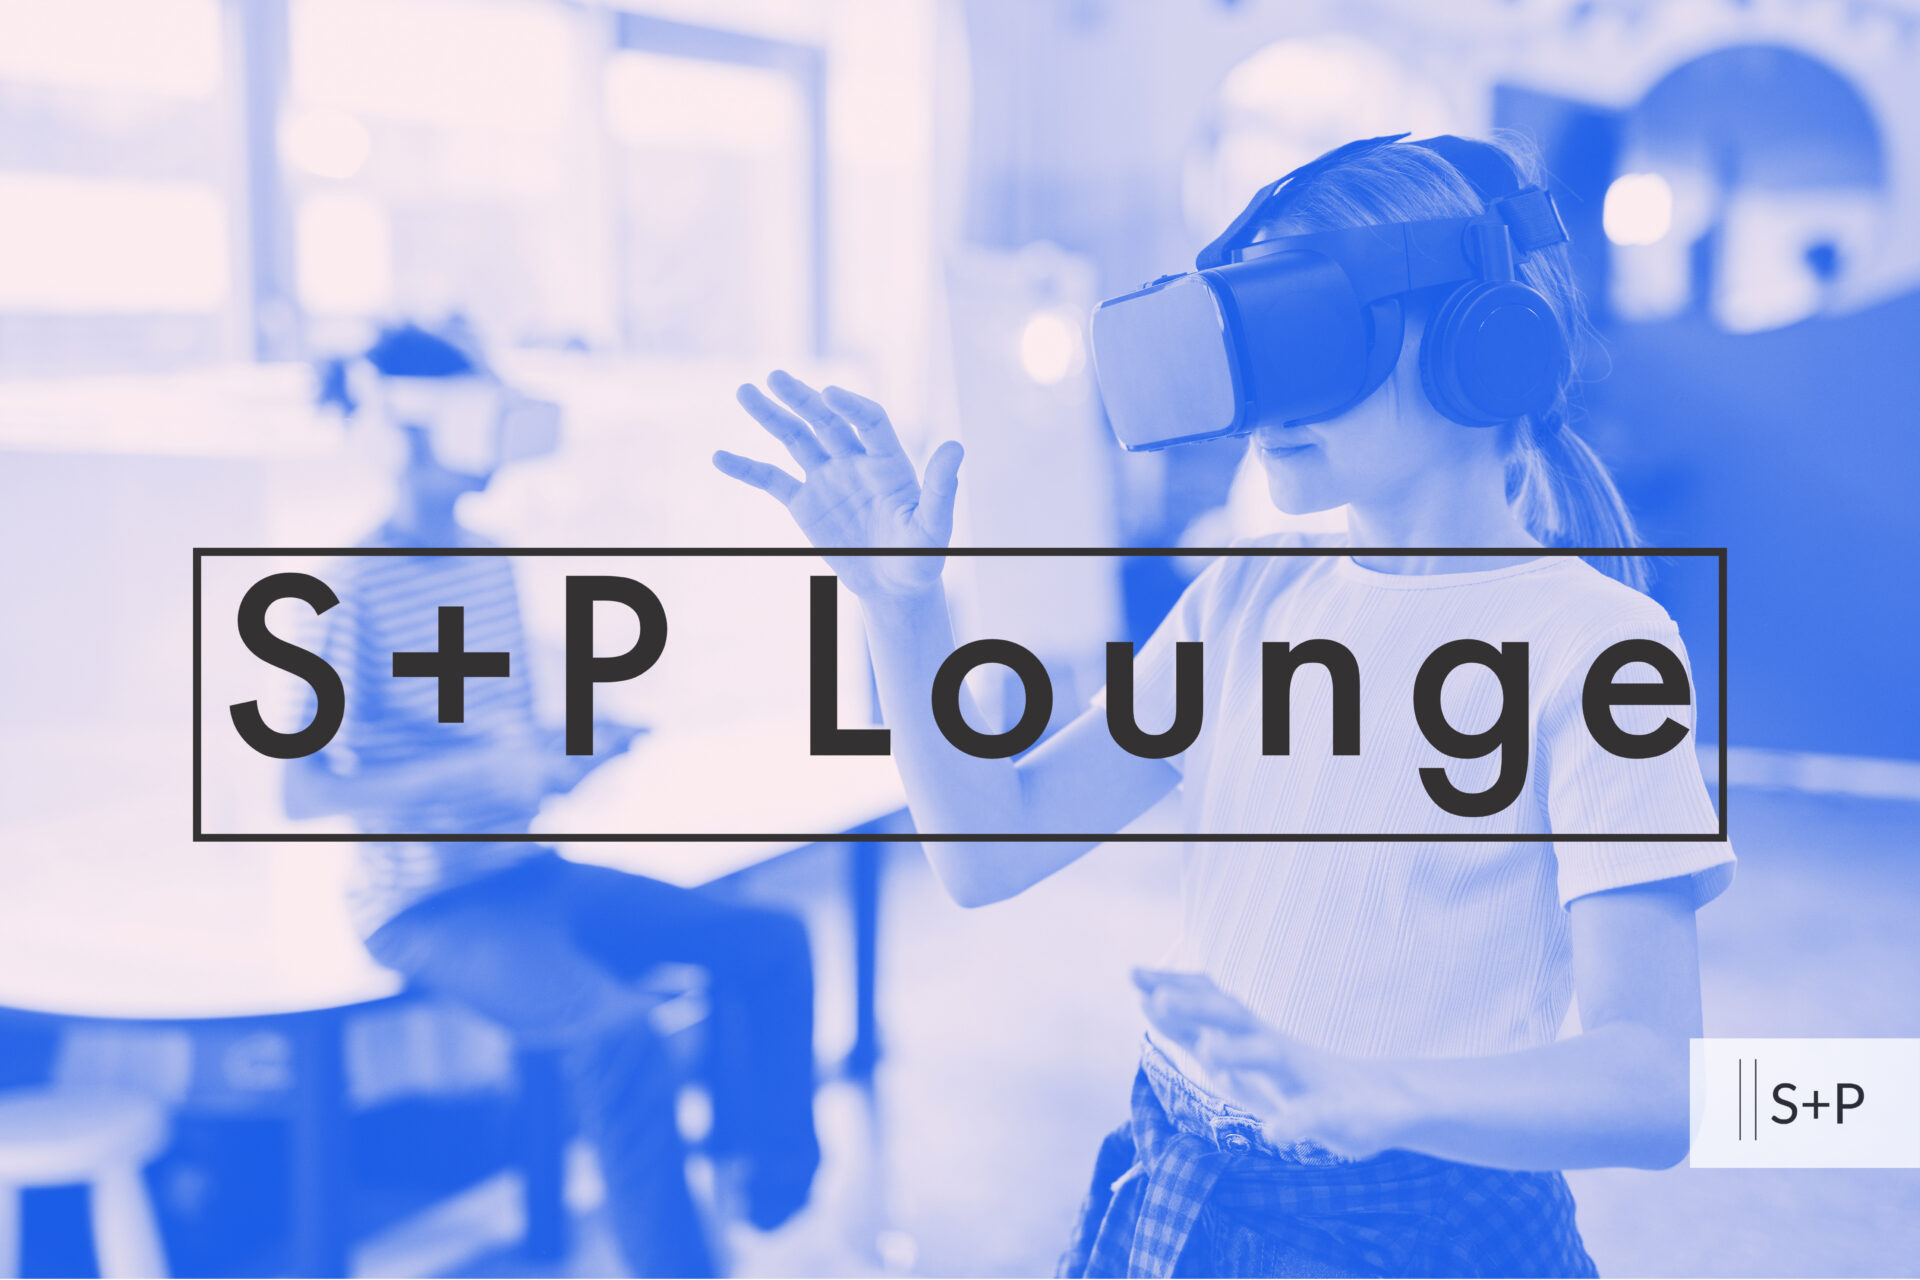 S+P Lounge